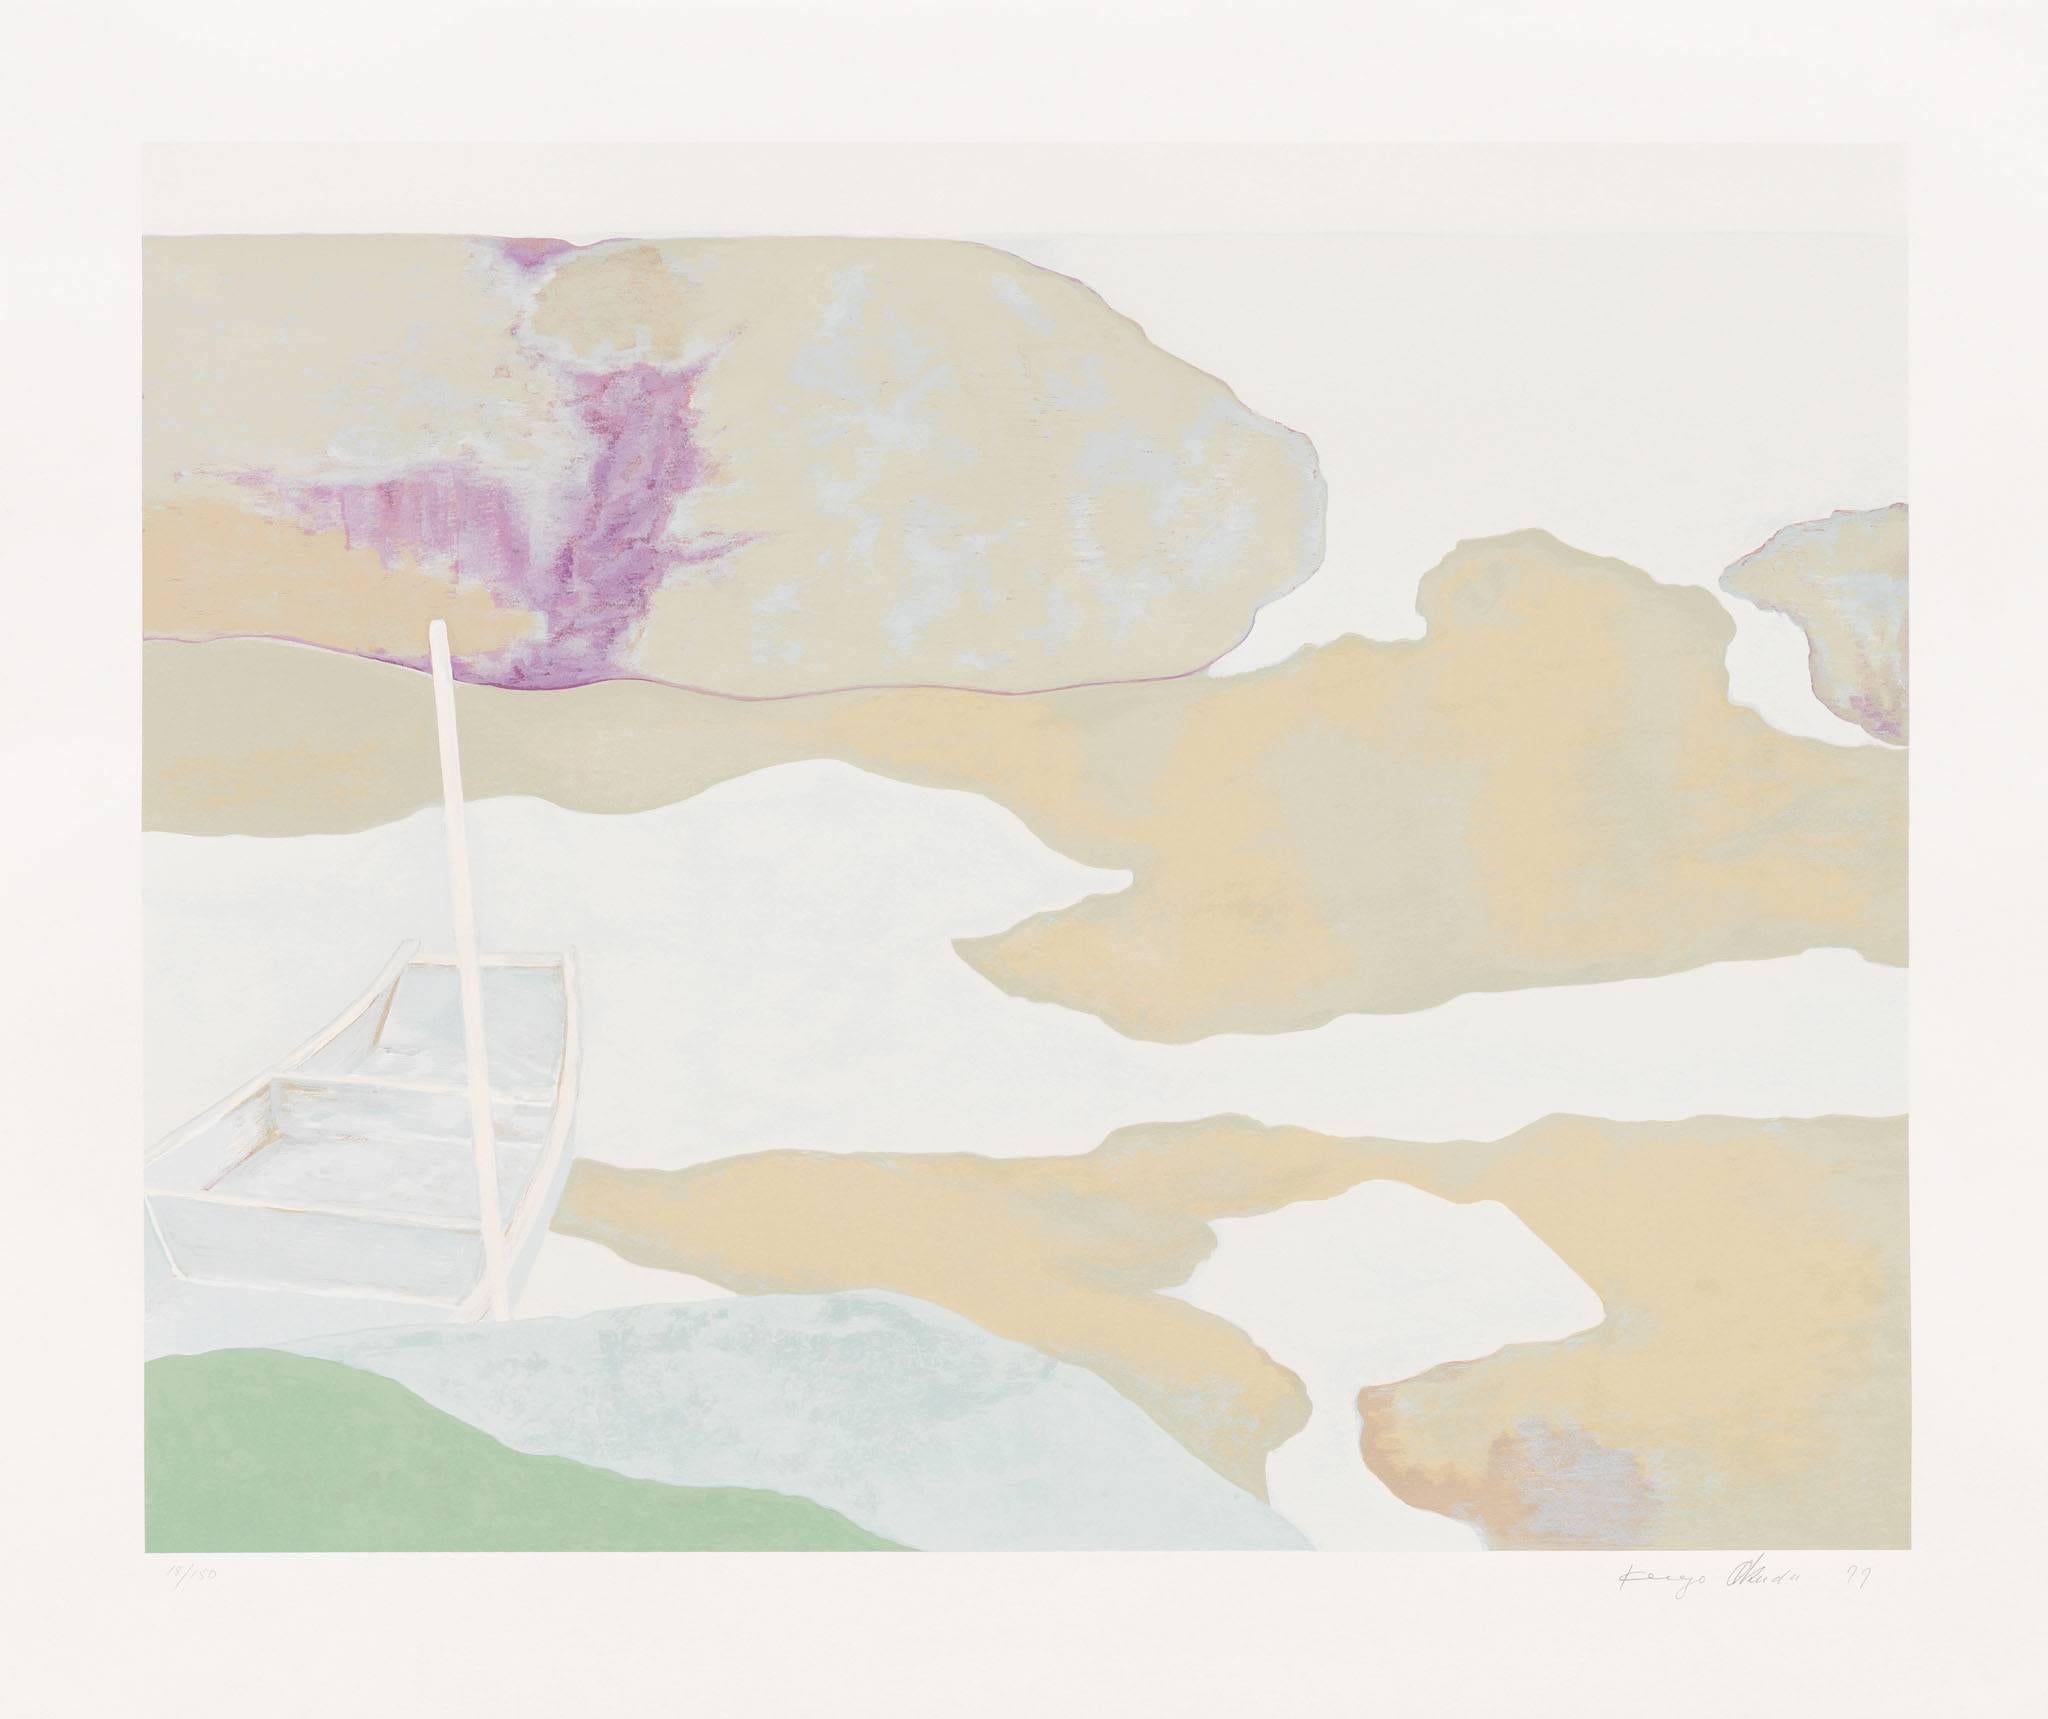 Kenzo Okada Landscape Print - Boat